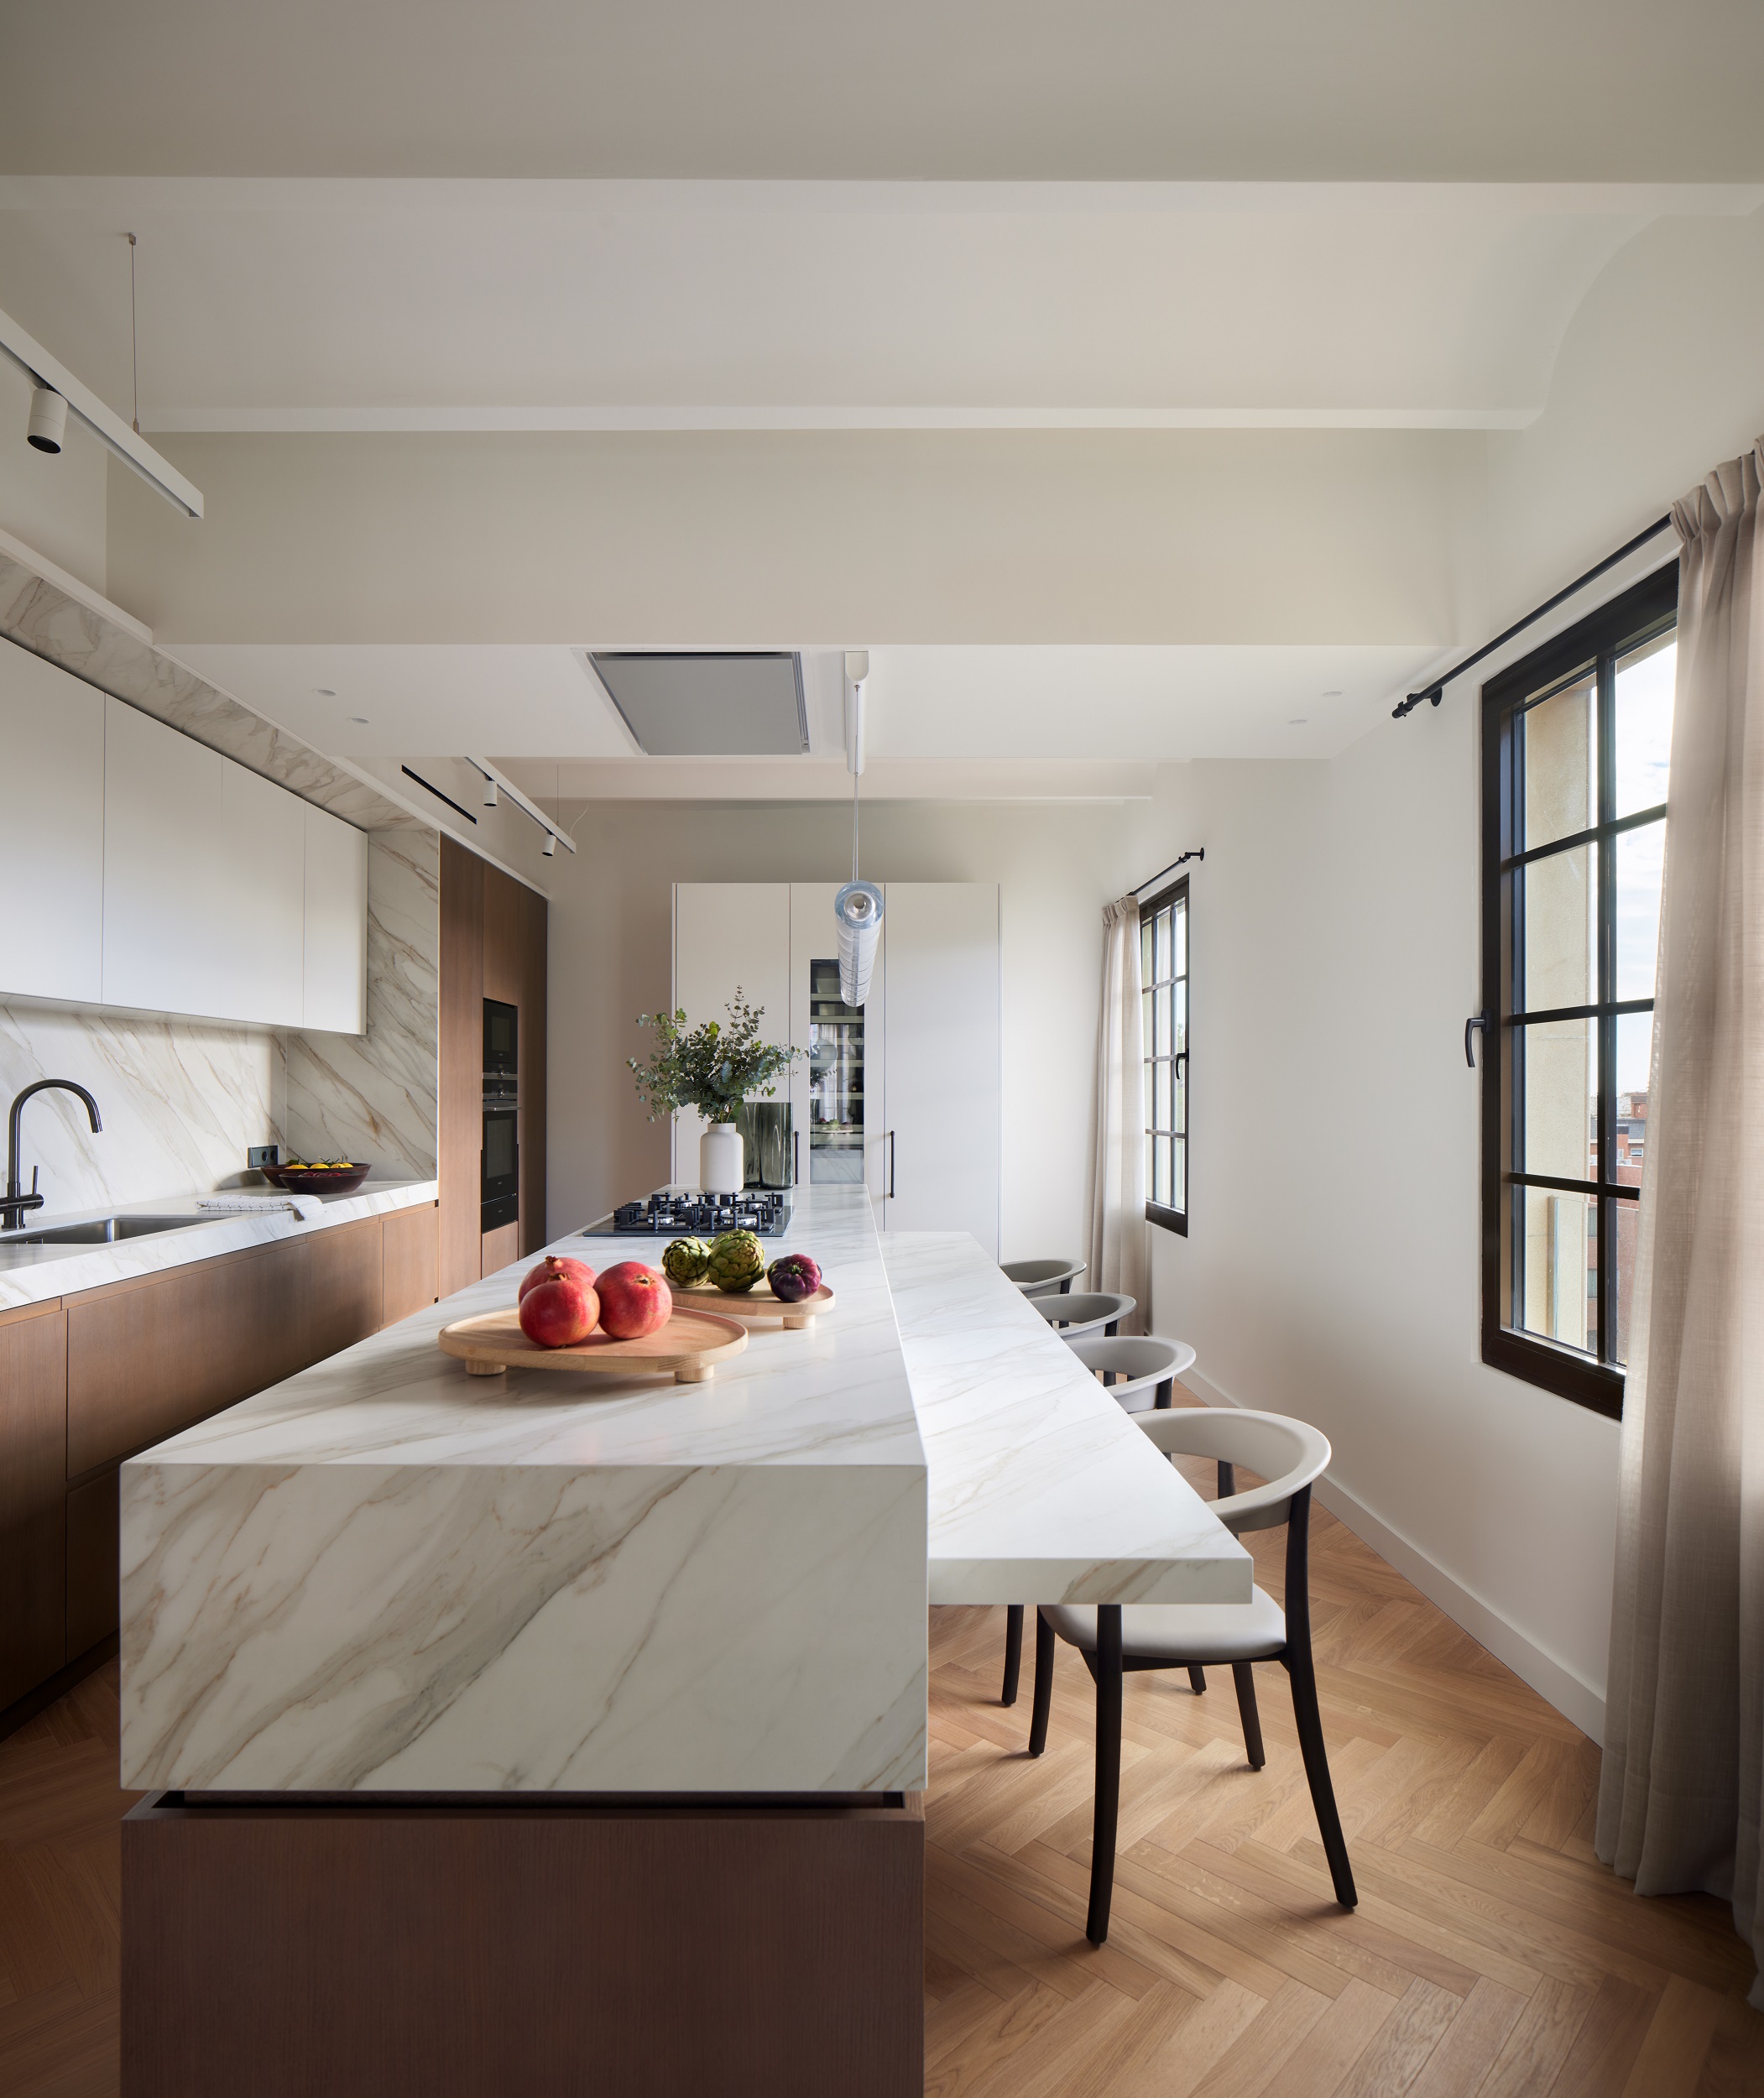 Pedralbes AV. Penthouse LUV Studio Kitchen 2 - LUV Studio - Arquitectura y diseño - Barcelona